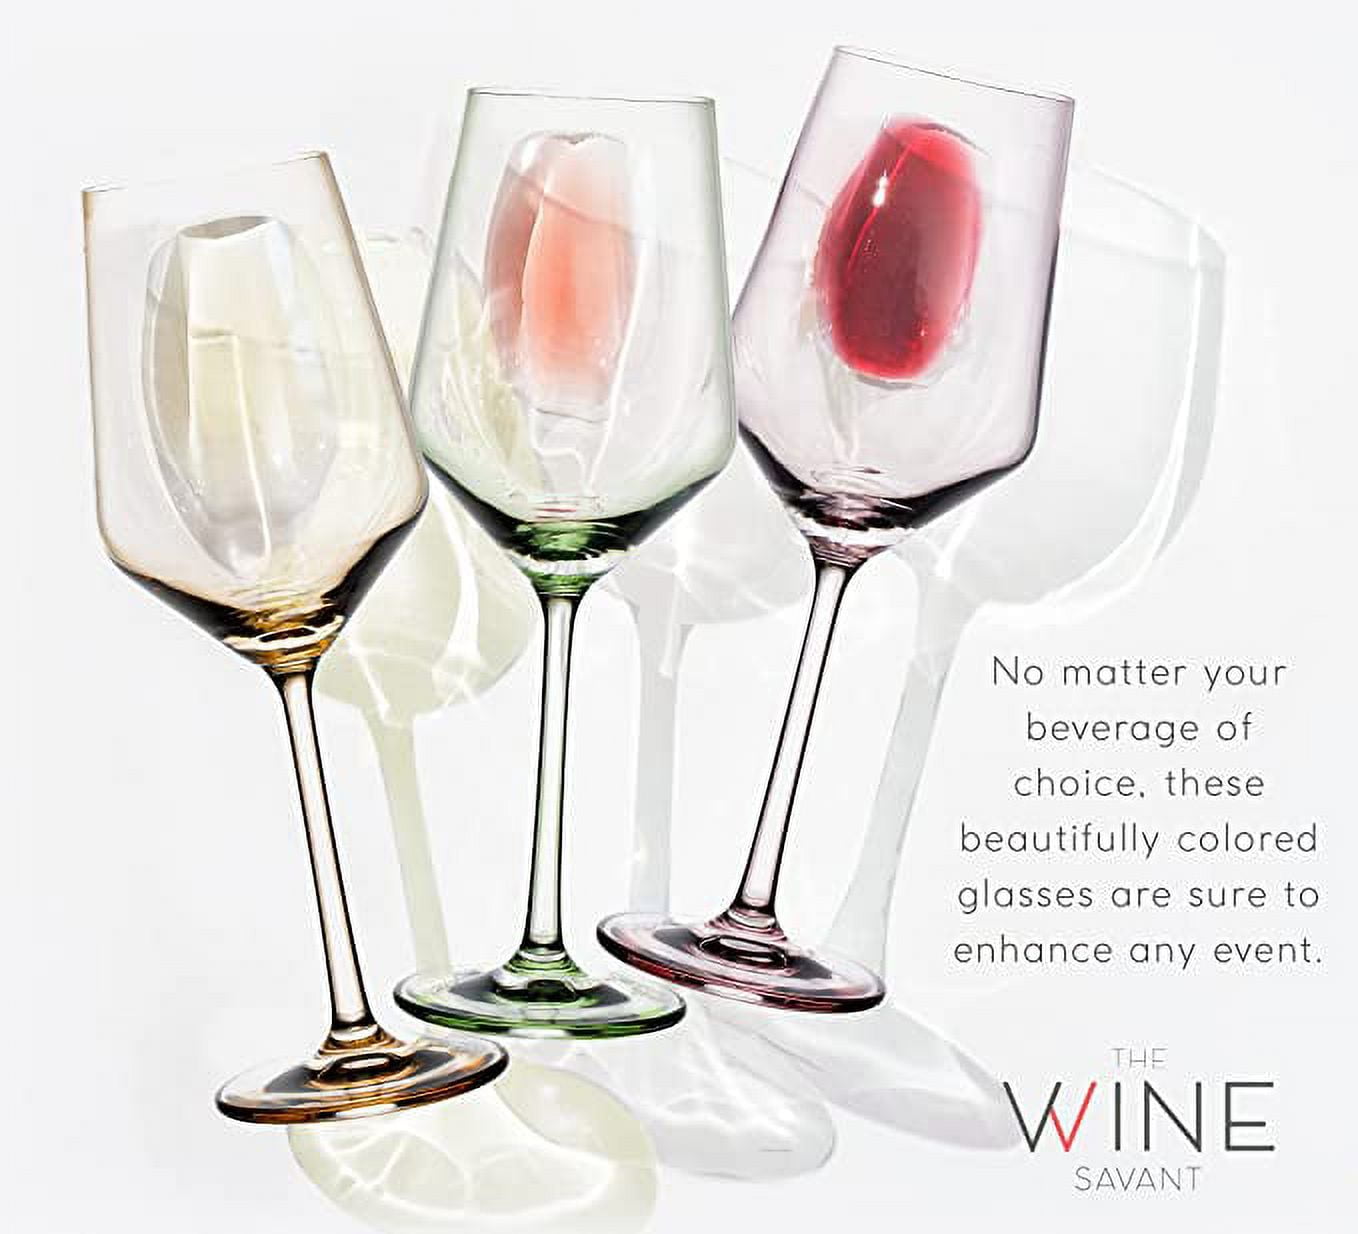 Maxdot Colored Wine Glasses Set of 12 Reusable Colorful Wine Glasses with  Stems Wine Glasses with Mu…See more Maxdot Colored Wine Glasses Set of 12